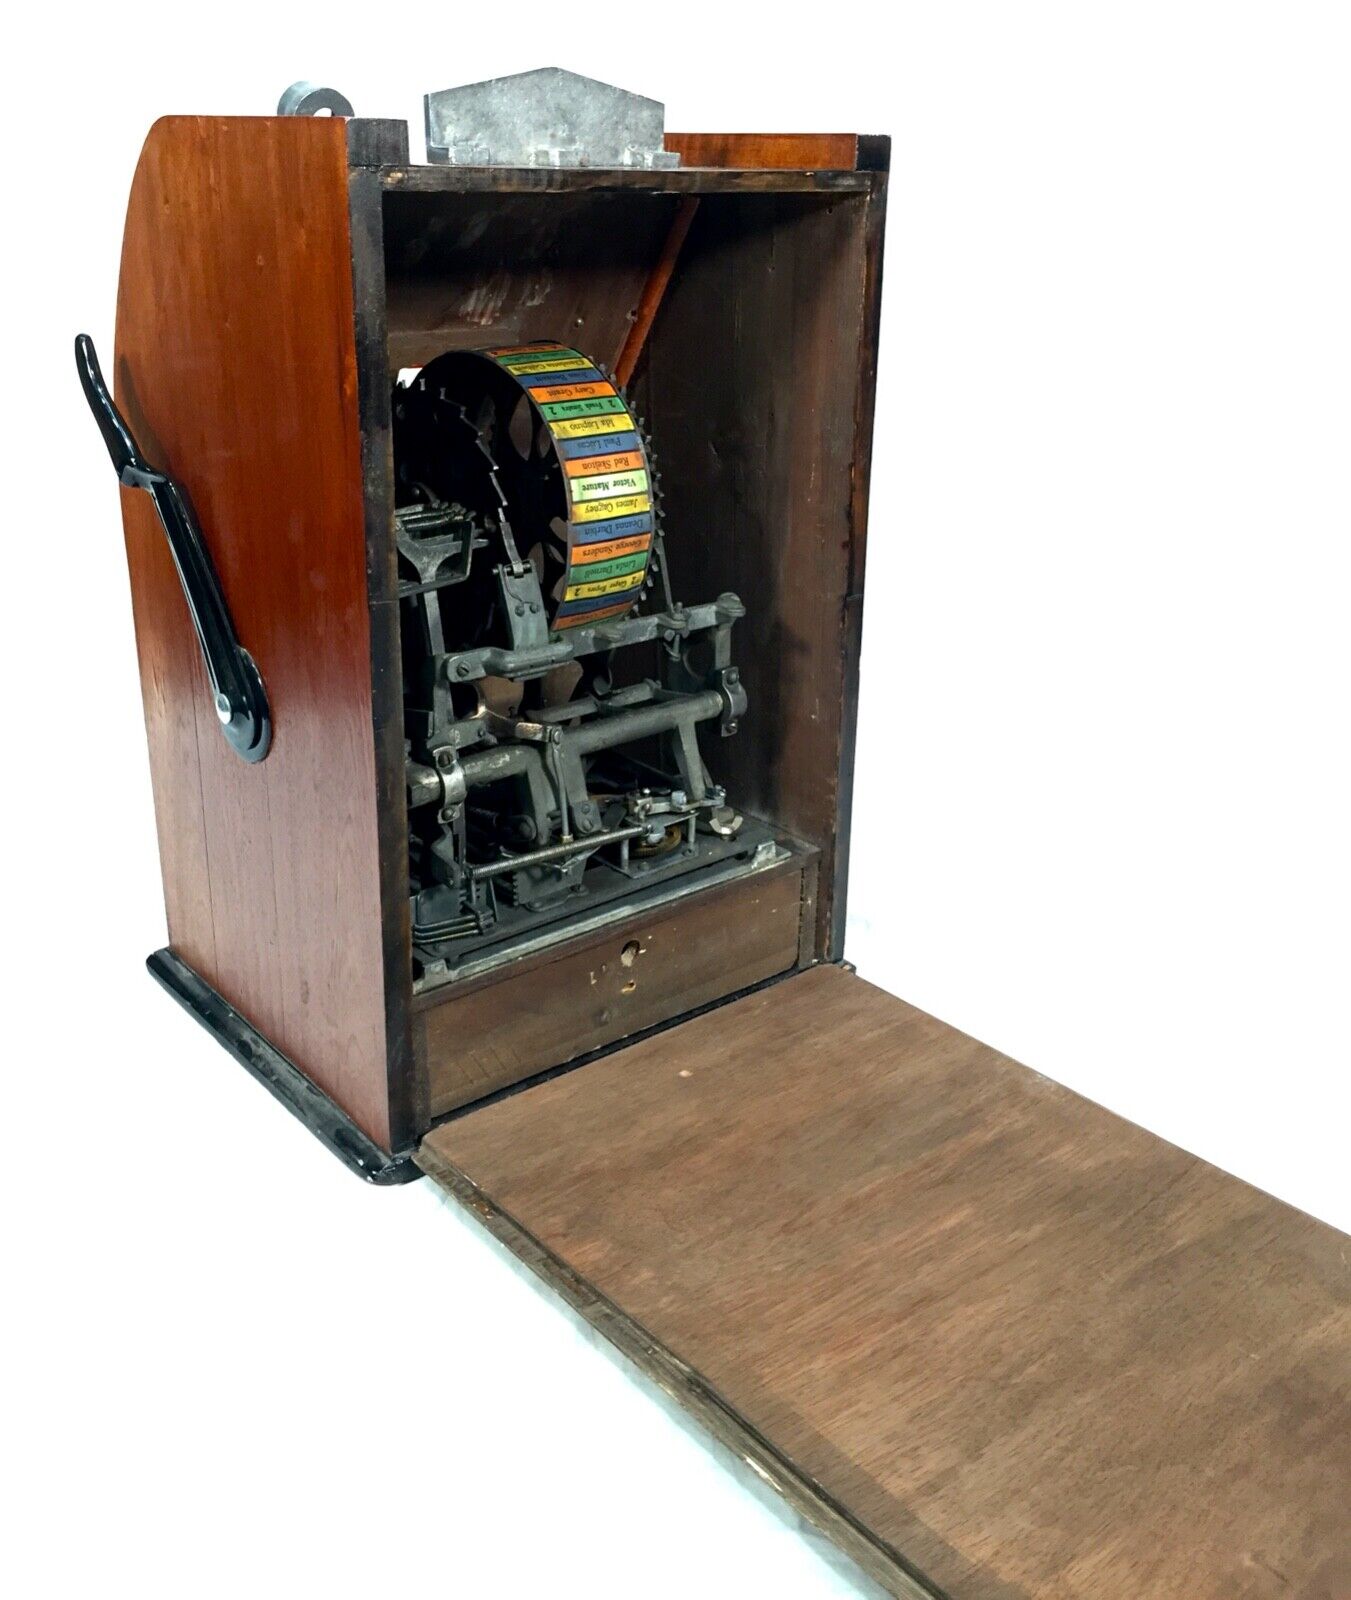 Antique One Arm Bandit Arcade Coin Operated Games Machine 'Film Stars' c.1940